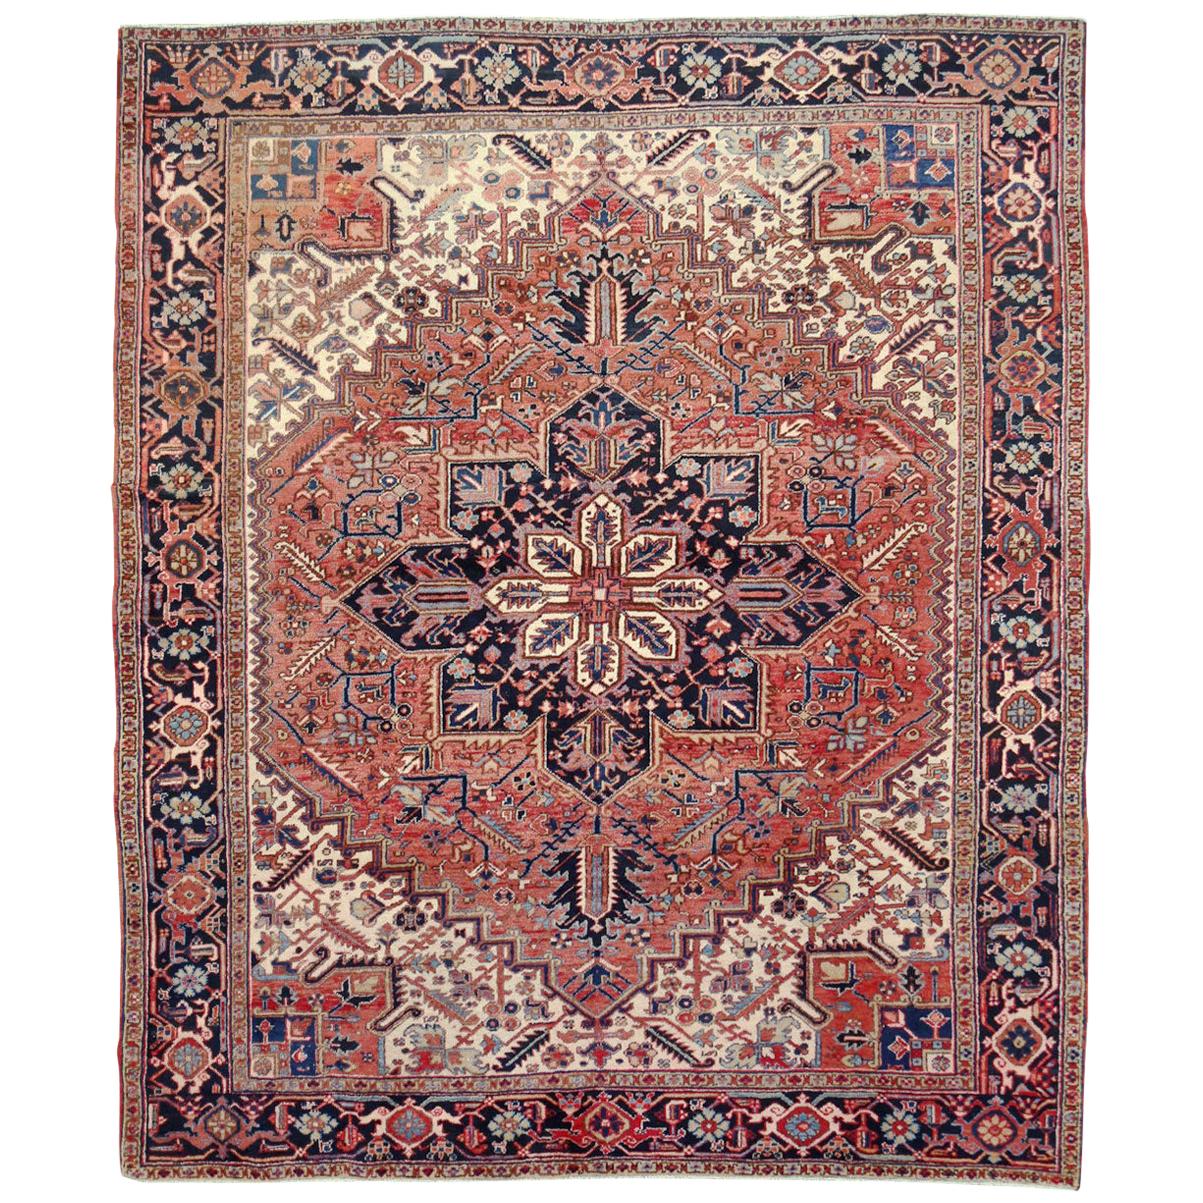 Rustic Mid-20th Century Handmade Persian Heriz Room Size Rug